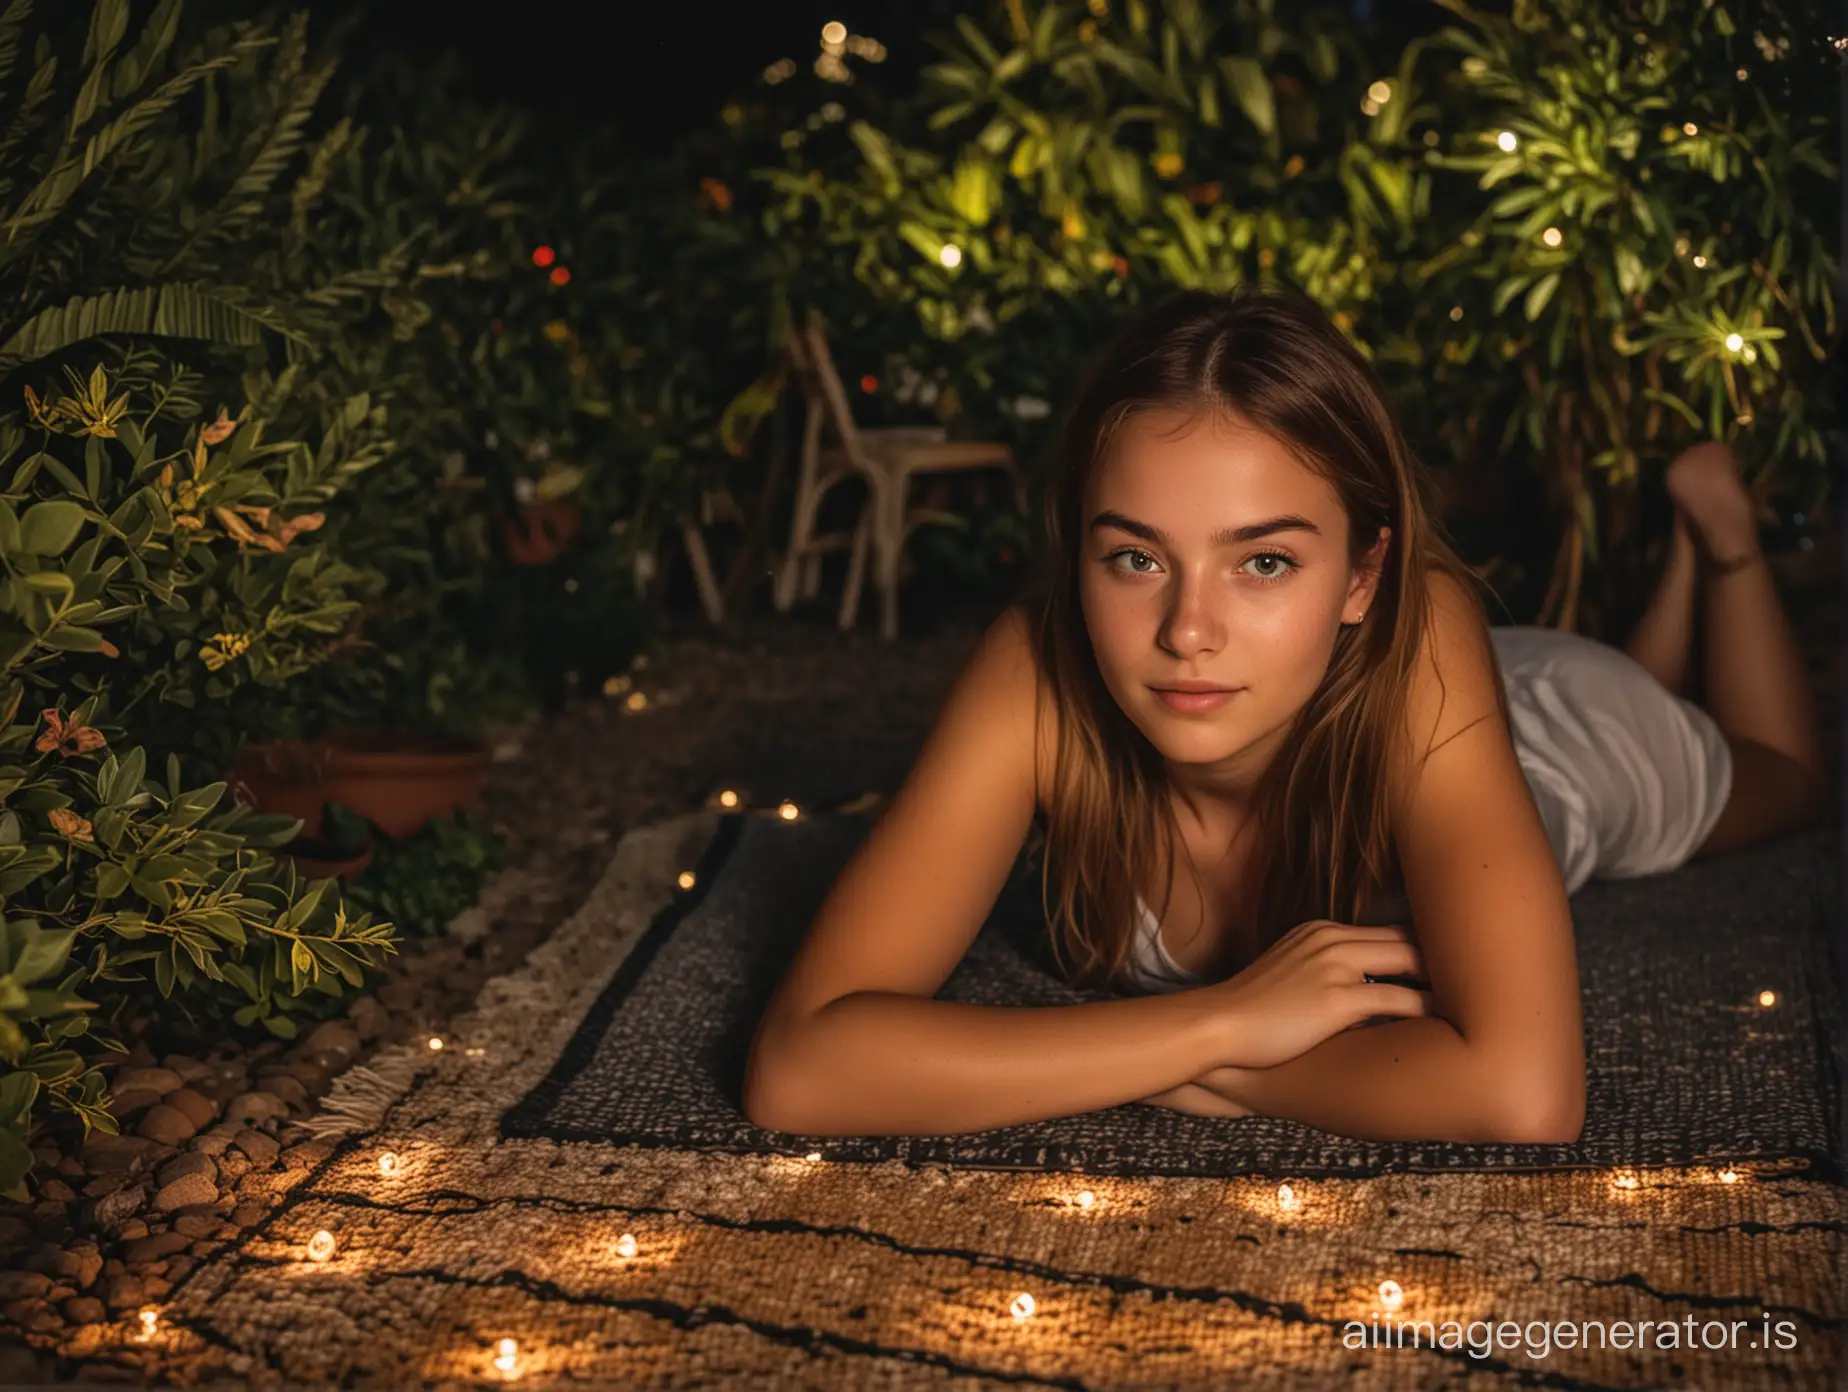 Auburn-Teen-Girl-Resting-in-Enchanted-Midnight-Garden-of-Tenerife